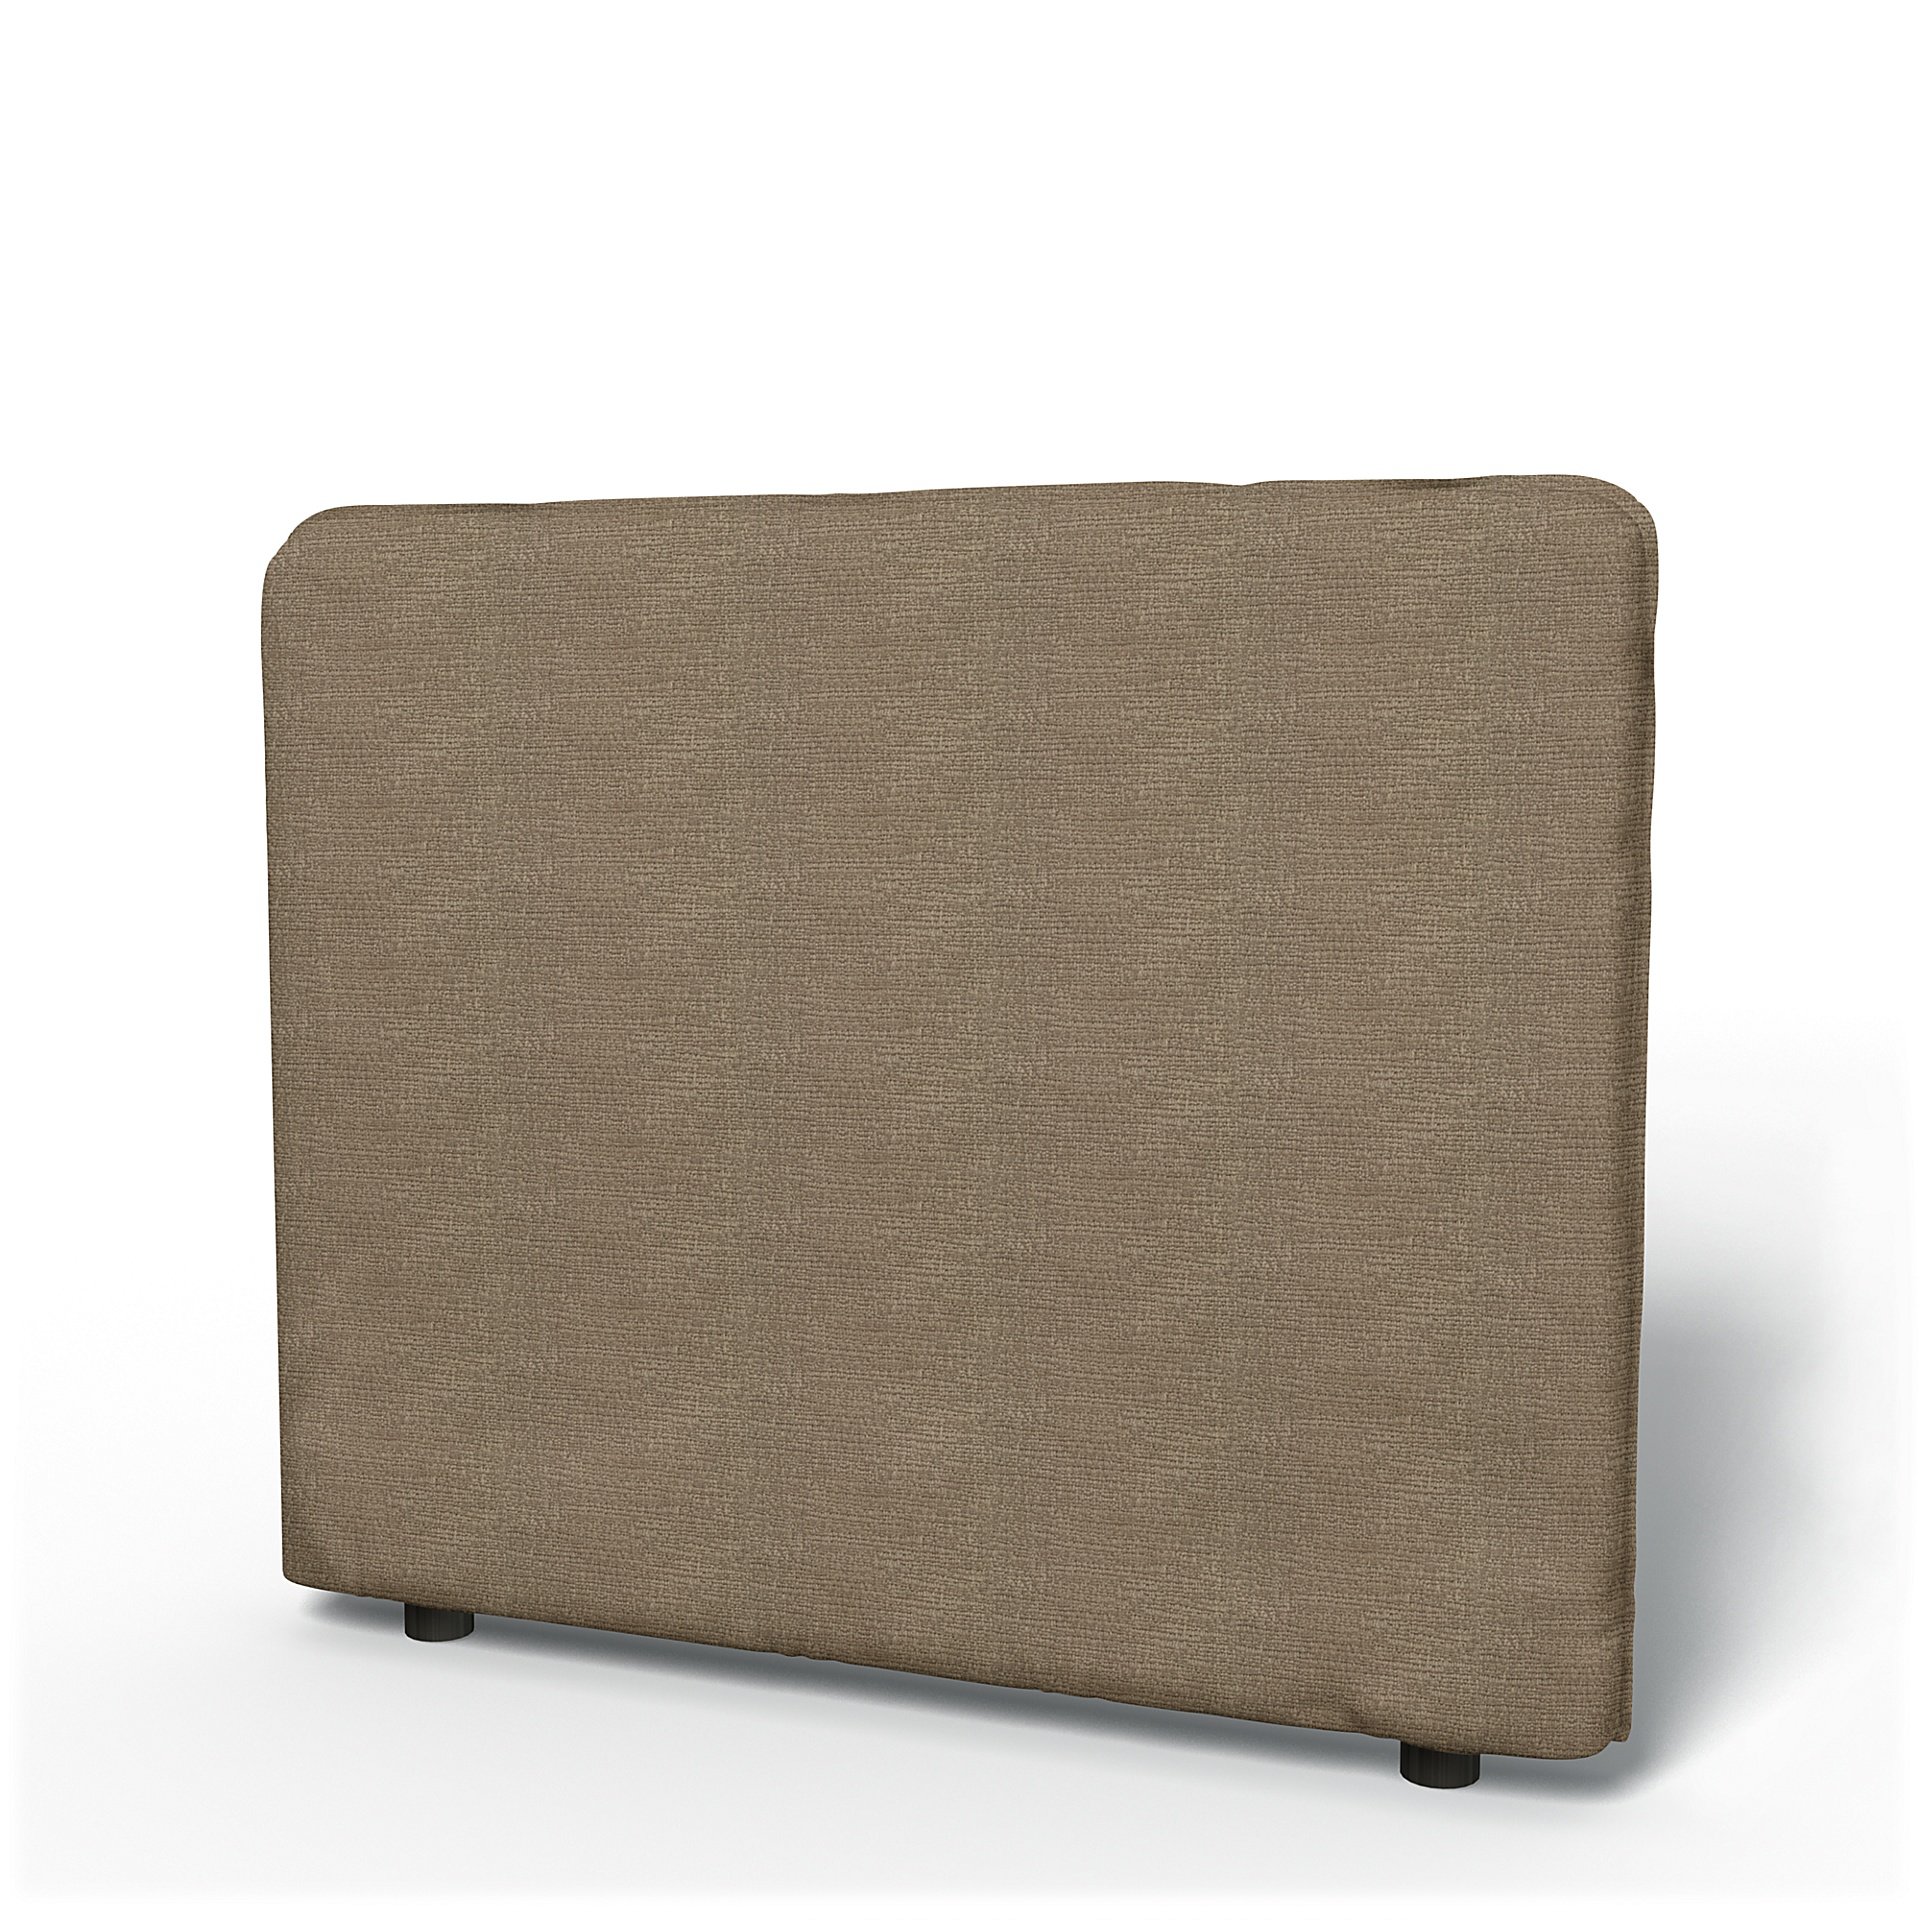 IKEA - Vallentuna Low Backrest Cover 100x80cm 39x32in, Camel, Boucle & Texture - Bemz